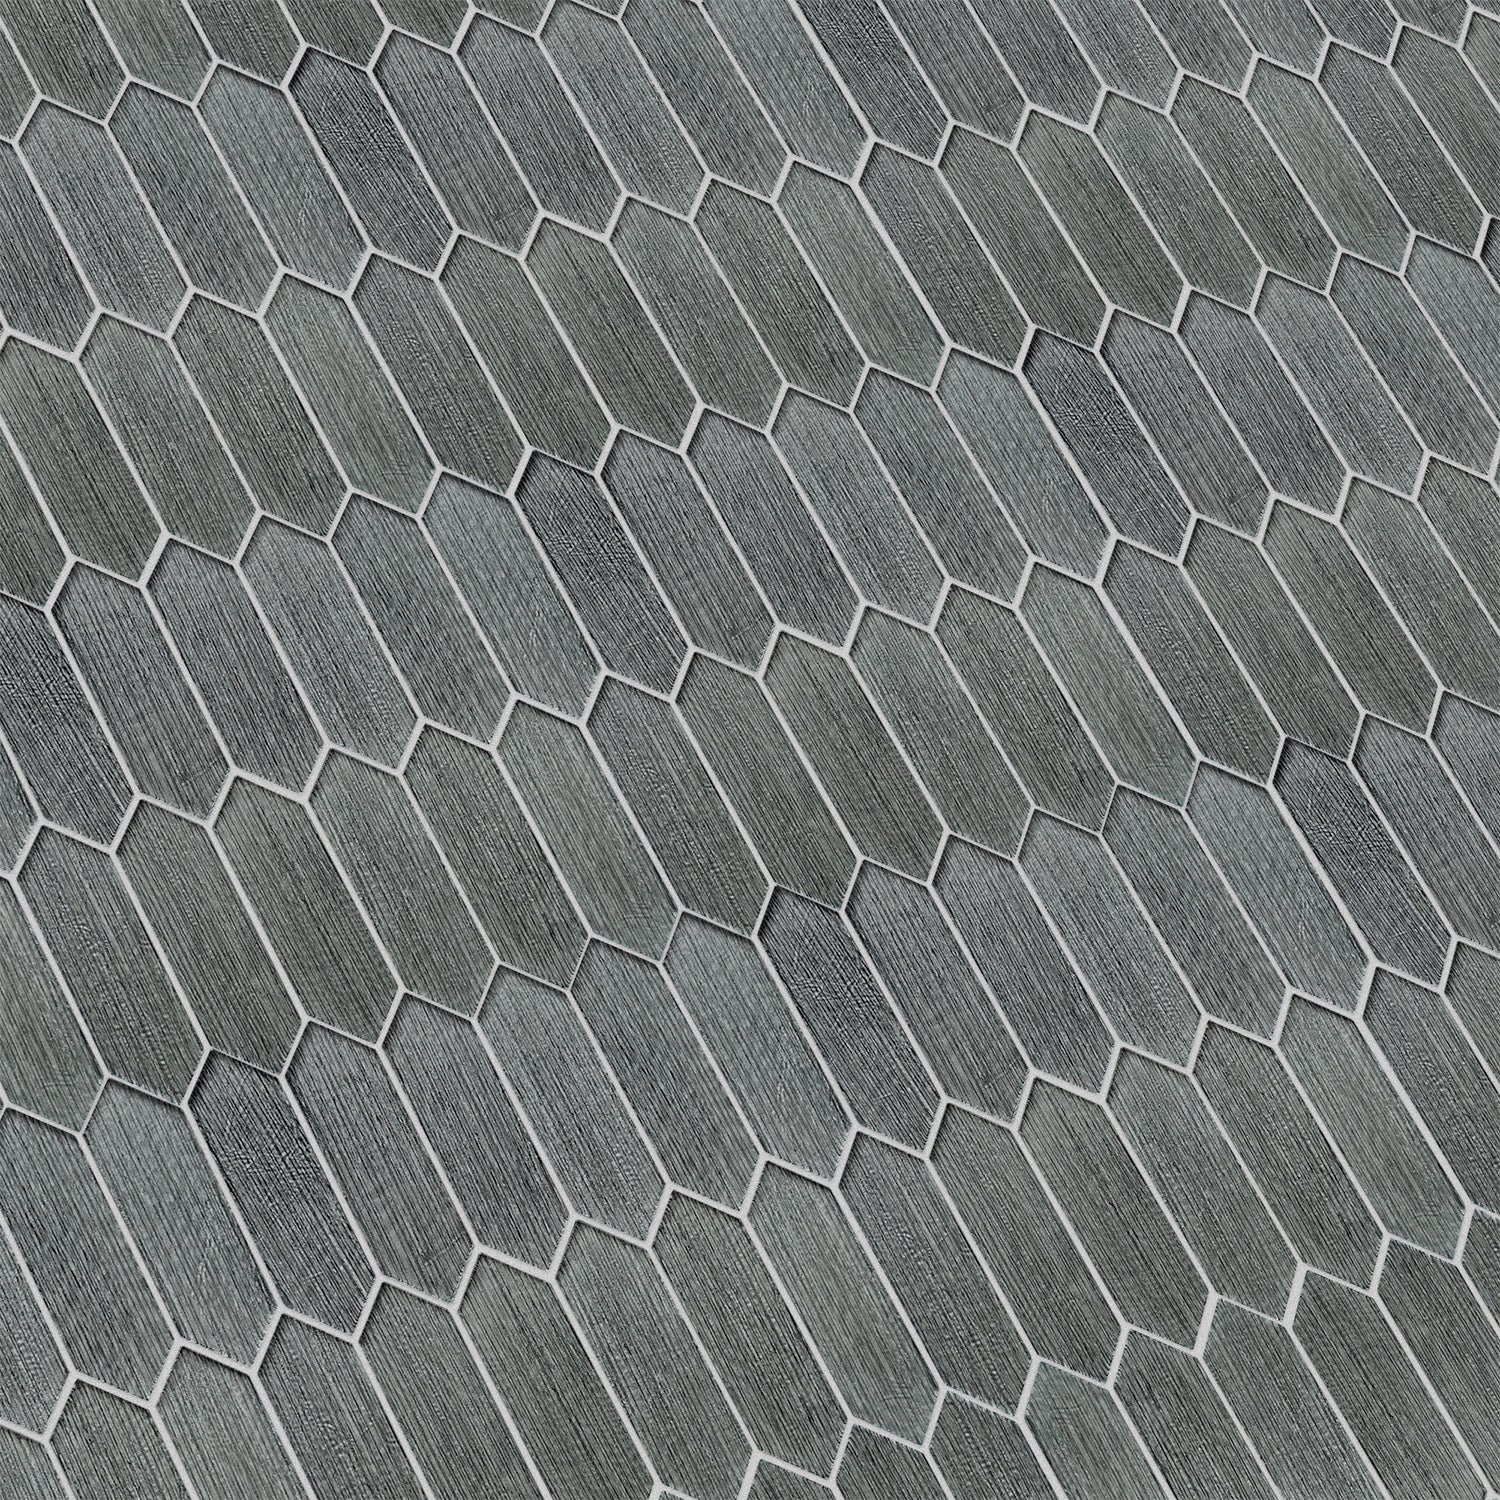 Windey 10.9" x 11.3" Hexagon Laminated Glass Mosaic Wall Tile